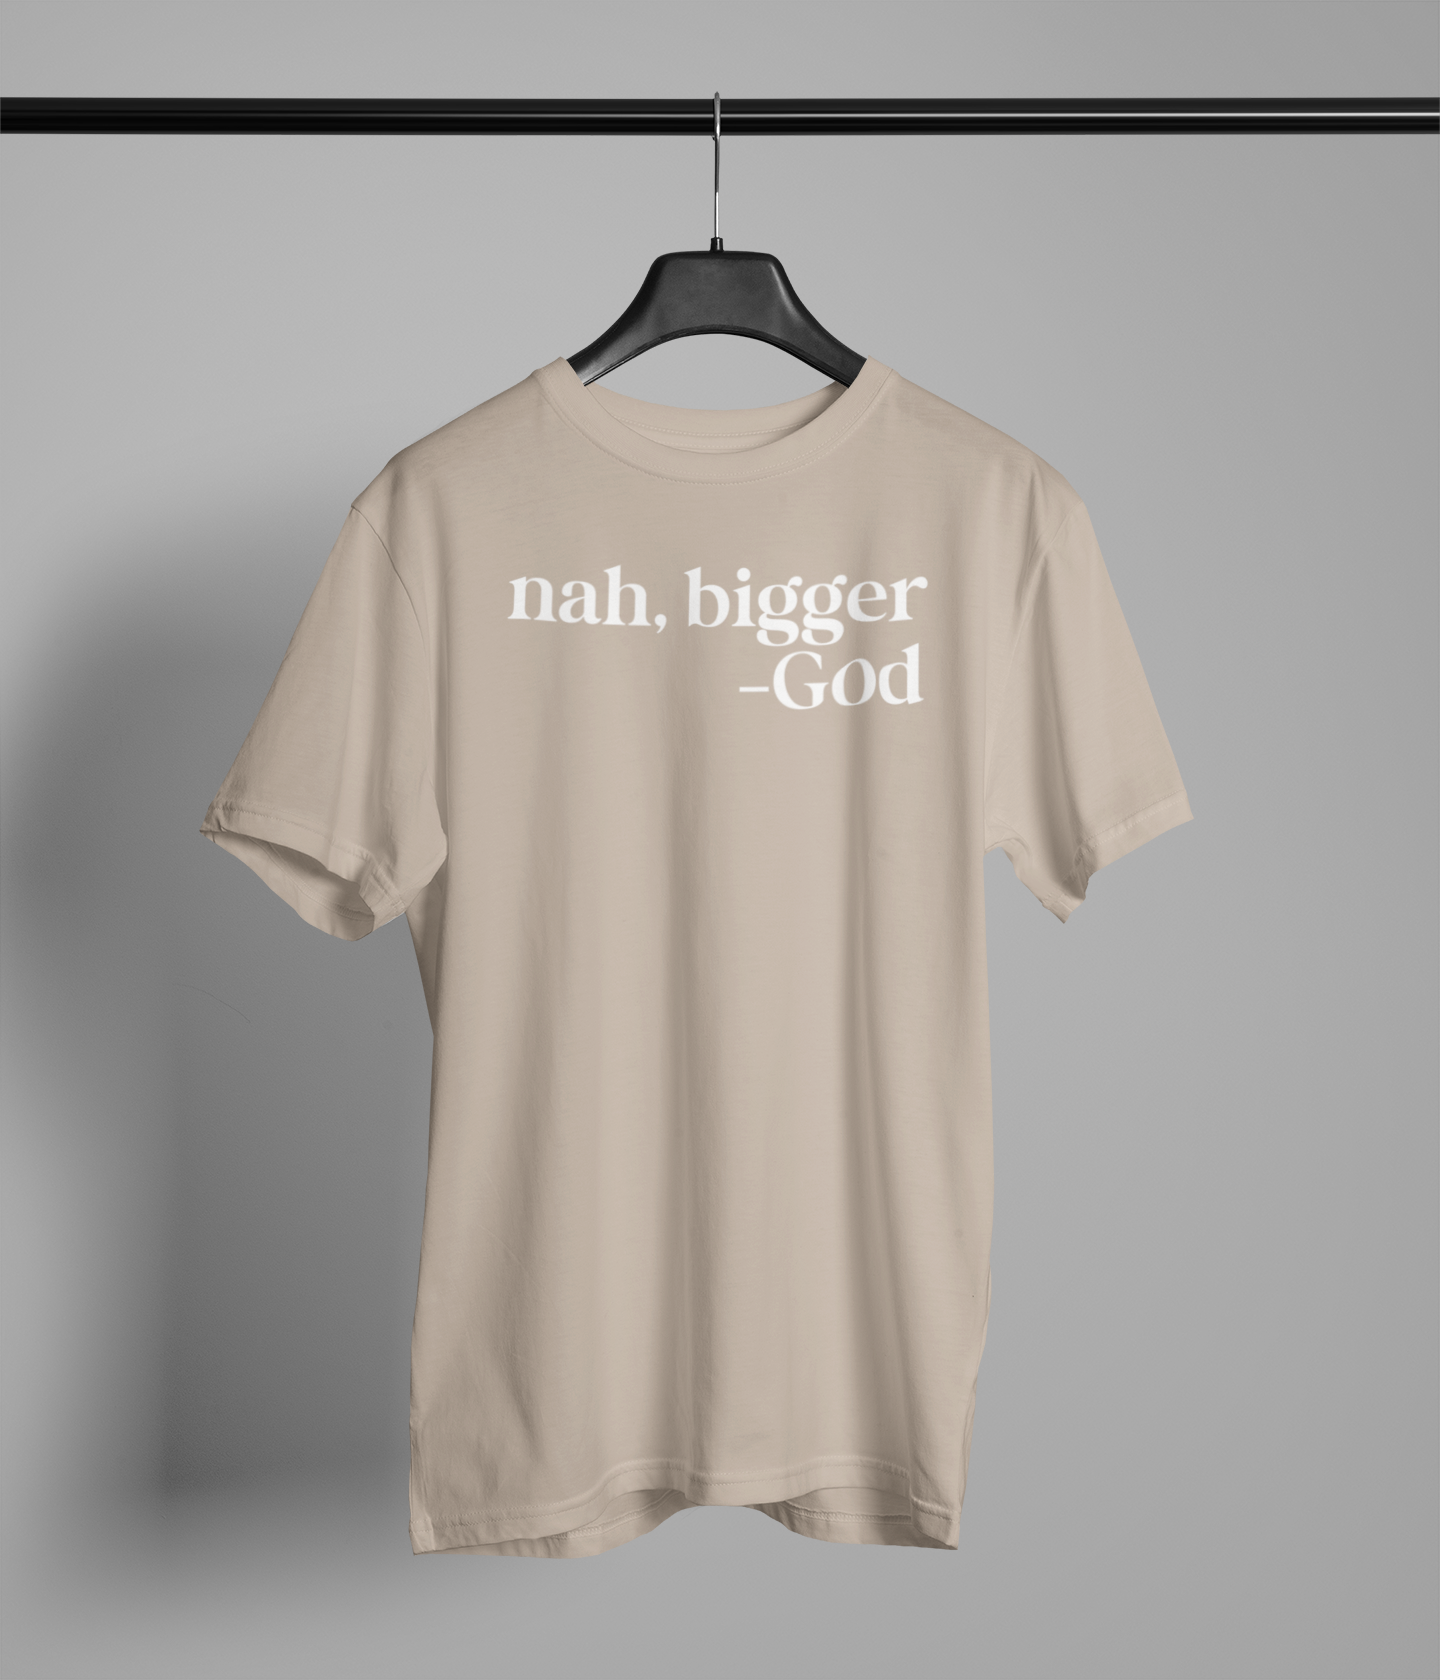 nah, bigger -God T-Shirt